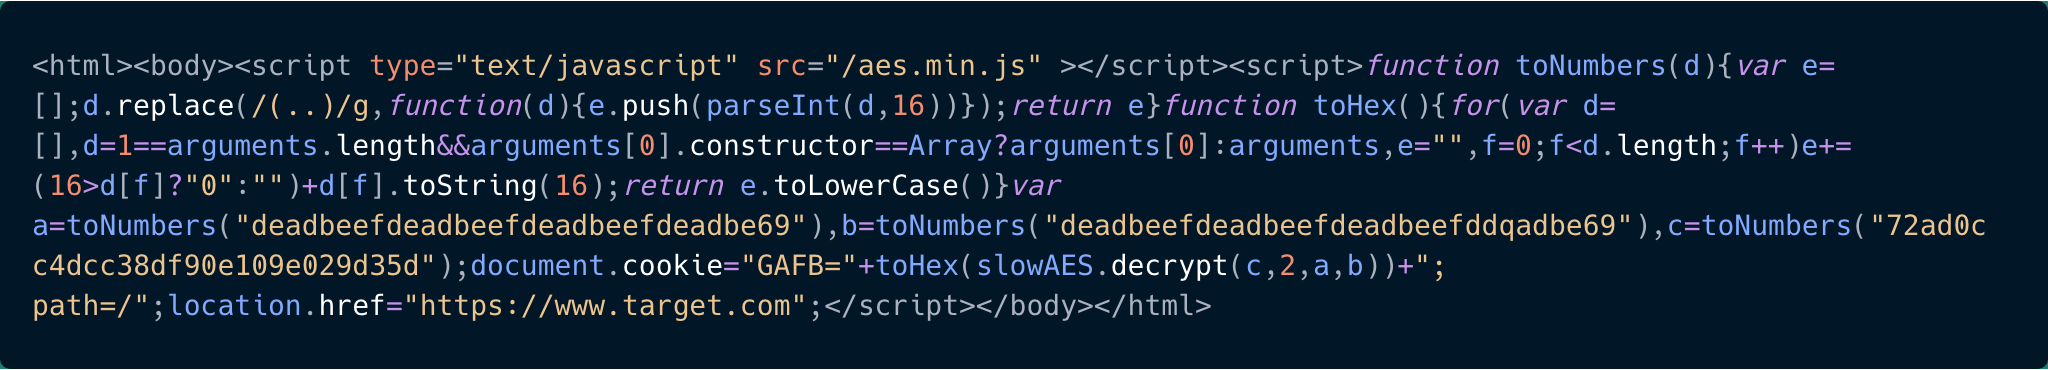 JavaScript code snippet